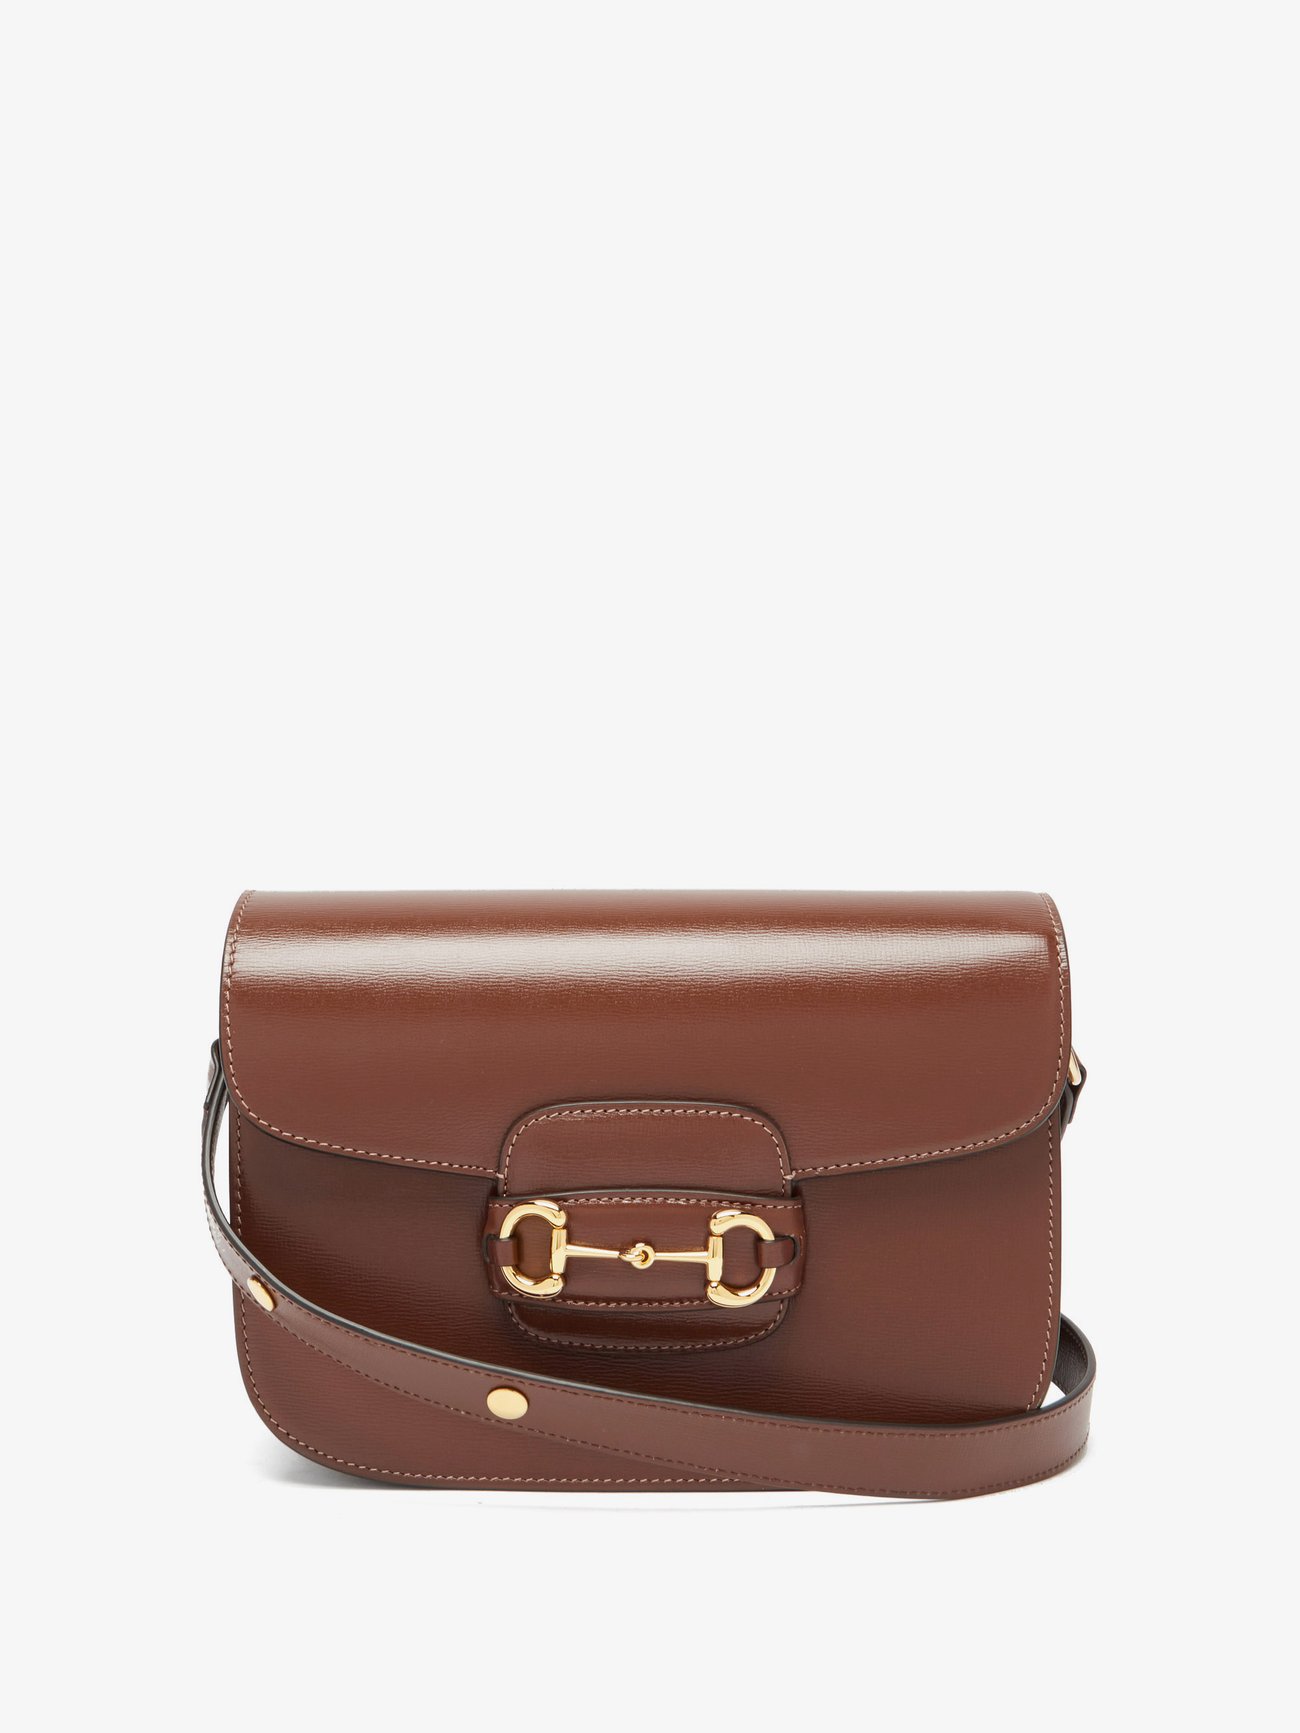 Tan 1955 Horsebit grained-leather shoulder bag | Gucci | MATCHES UK